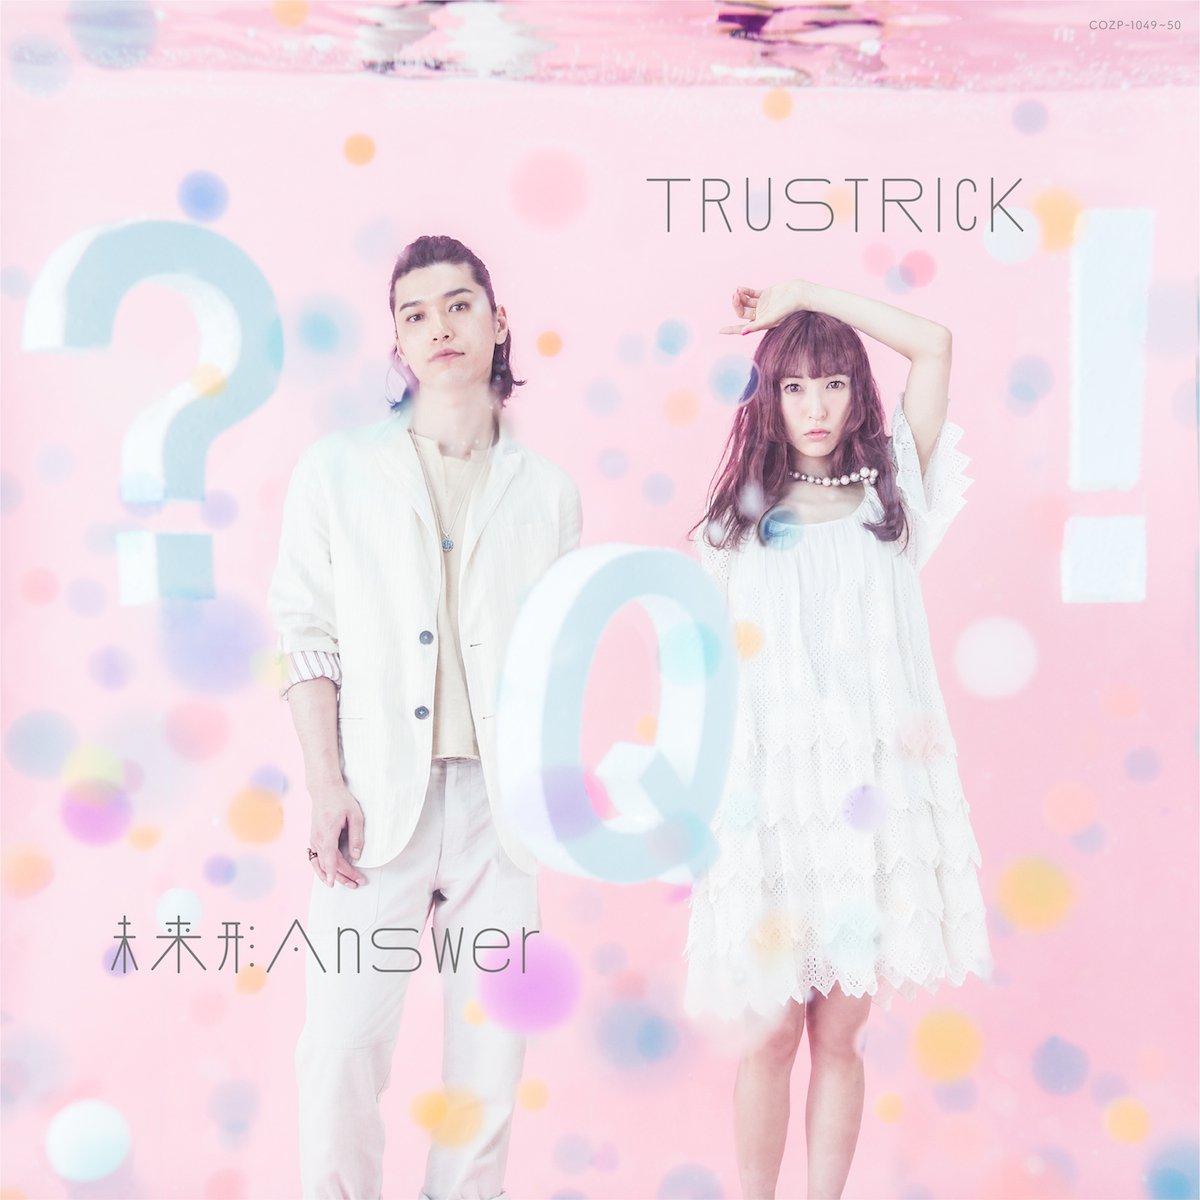 TRUSTRICK’s New MV for “Mirai Kei Answer” Features Sayaka Kanda Playing Guitar!